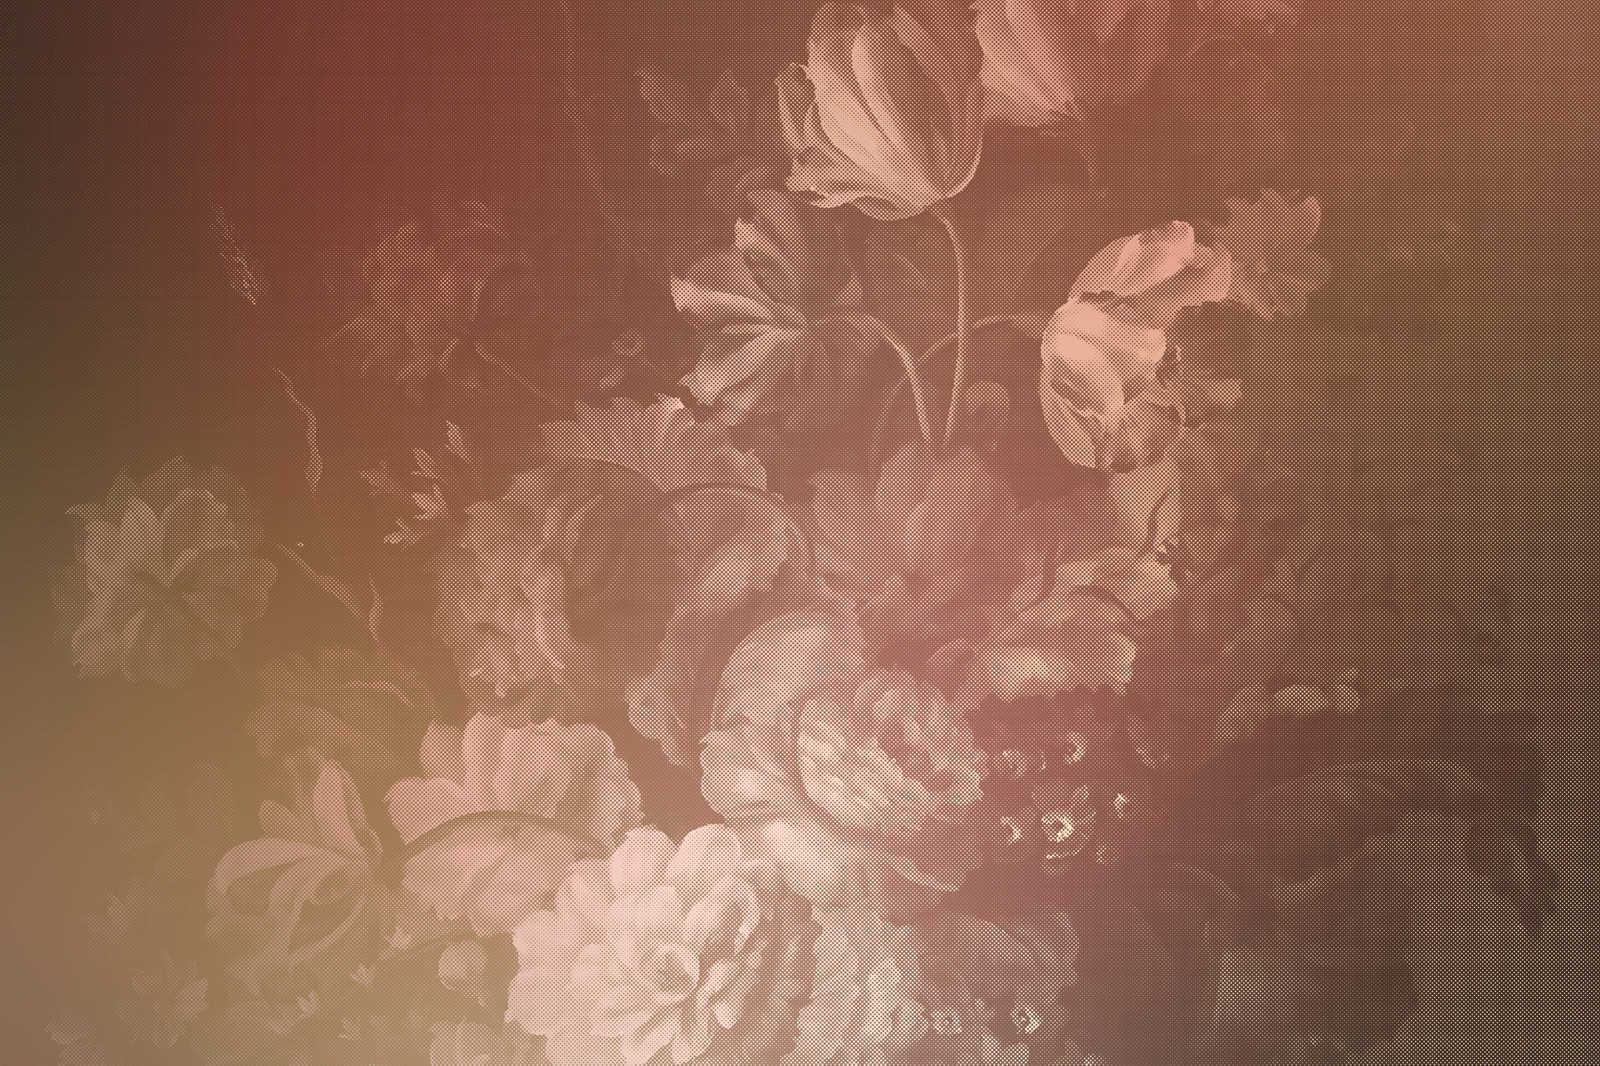             Pastello olandese 3 - Quadro su tela Bouquet in stile floreale olandese - 1,20 m x 0,80 m
        